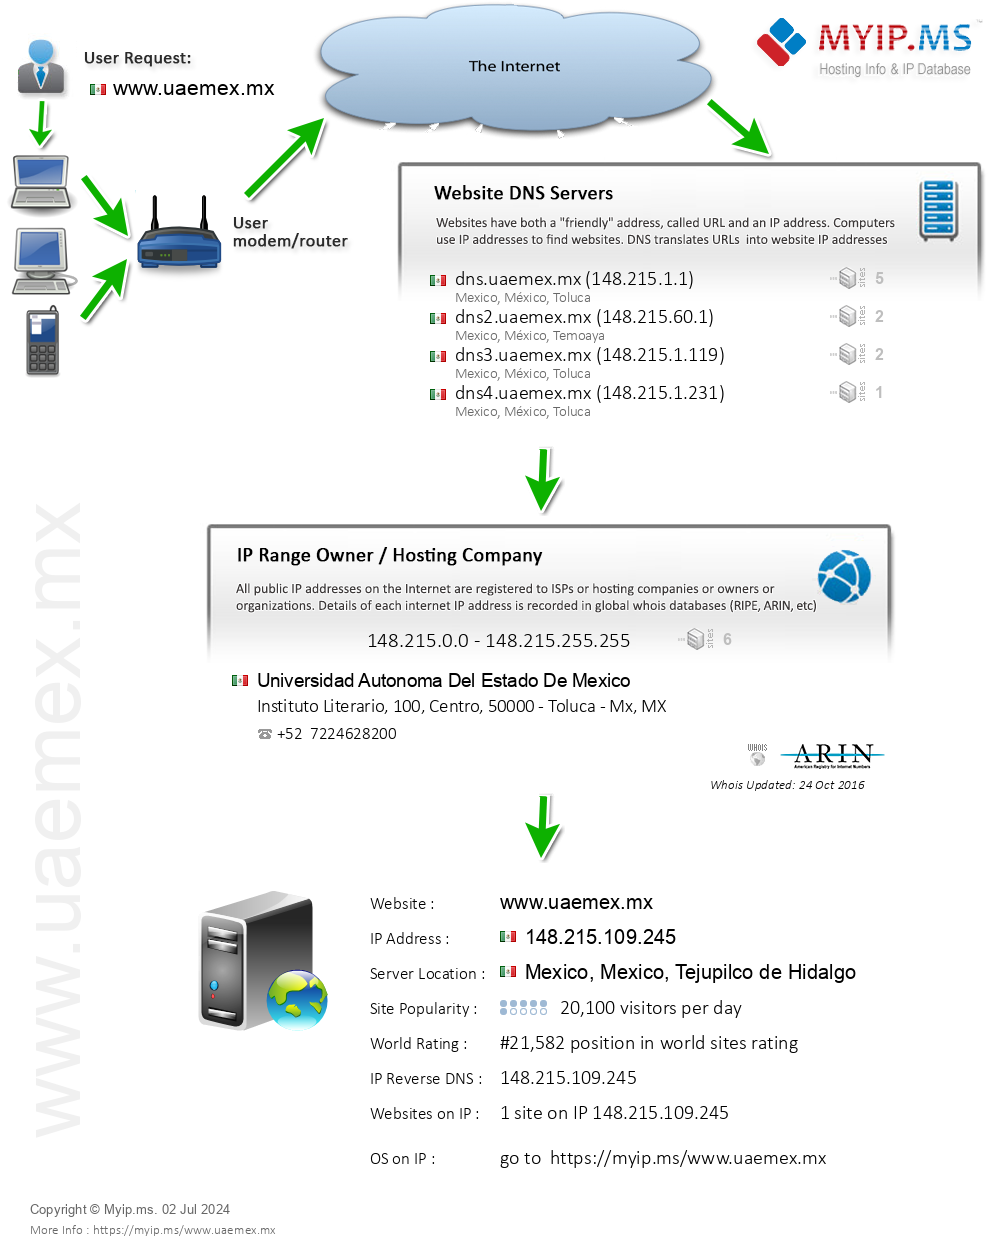 Uaemex.mx - Website Hosting Visual IP Diagram